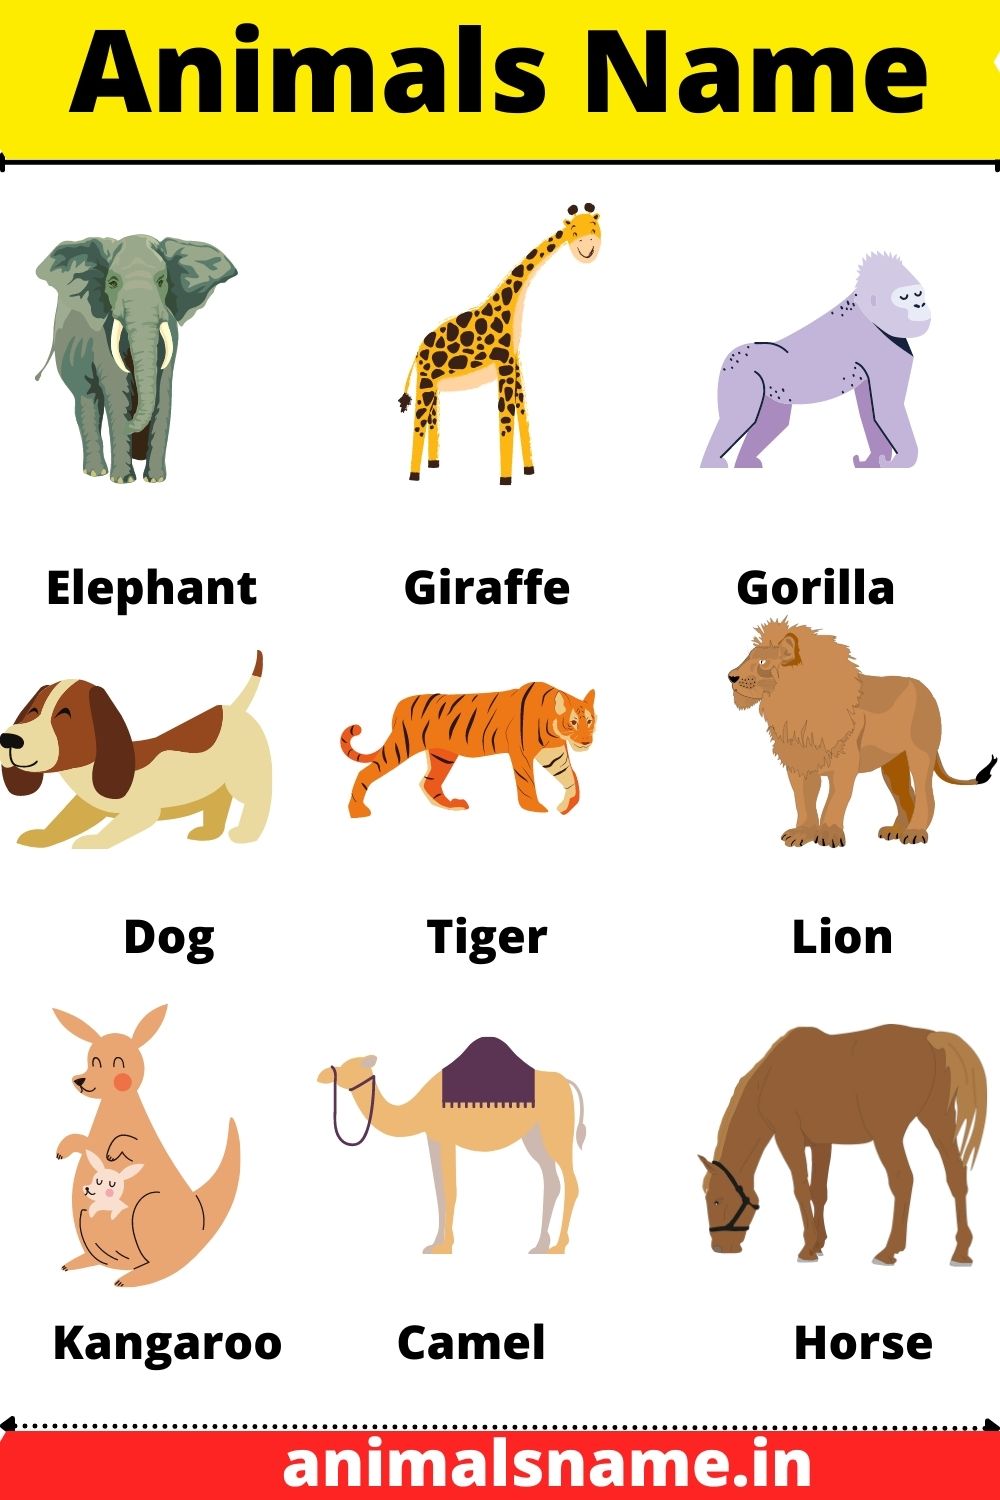 Animals name